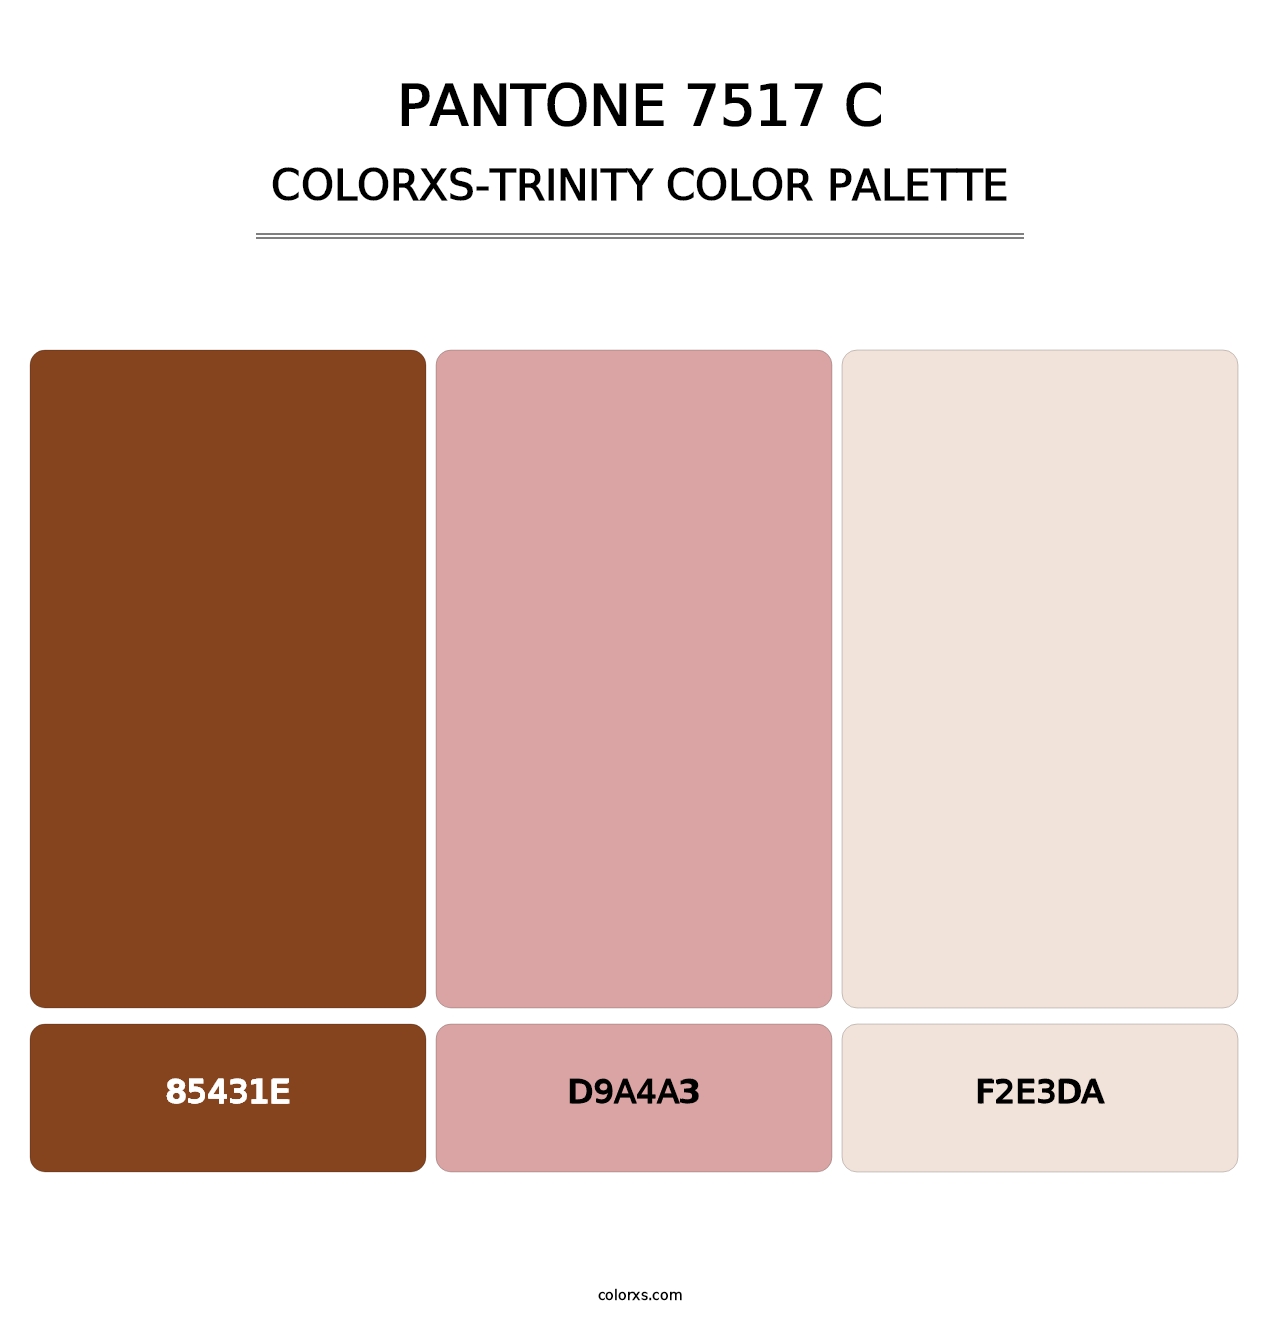 PANTONE 7517 C - Colorxs Trinity Palette